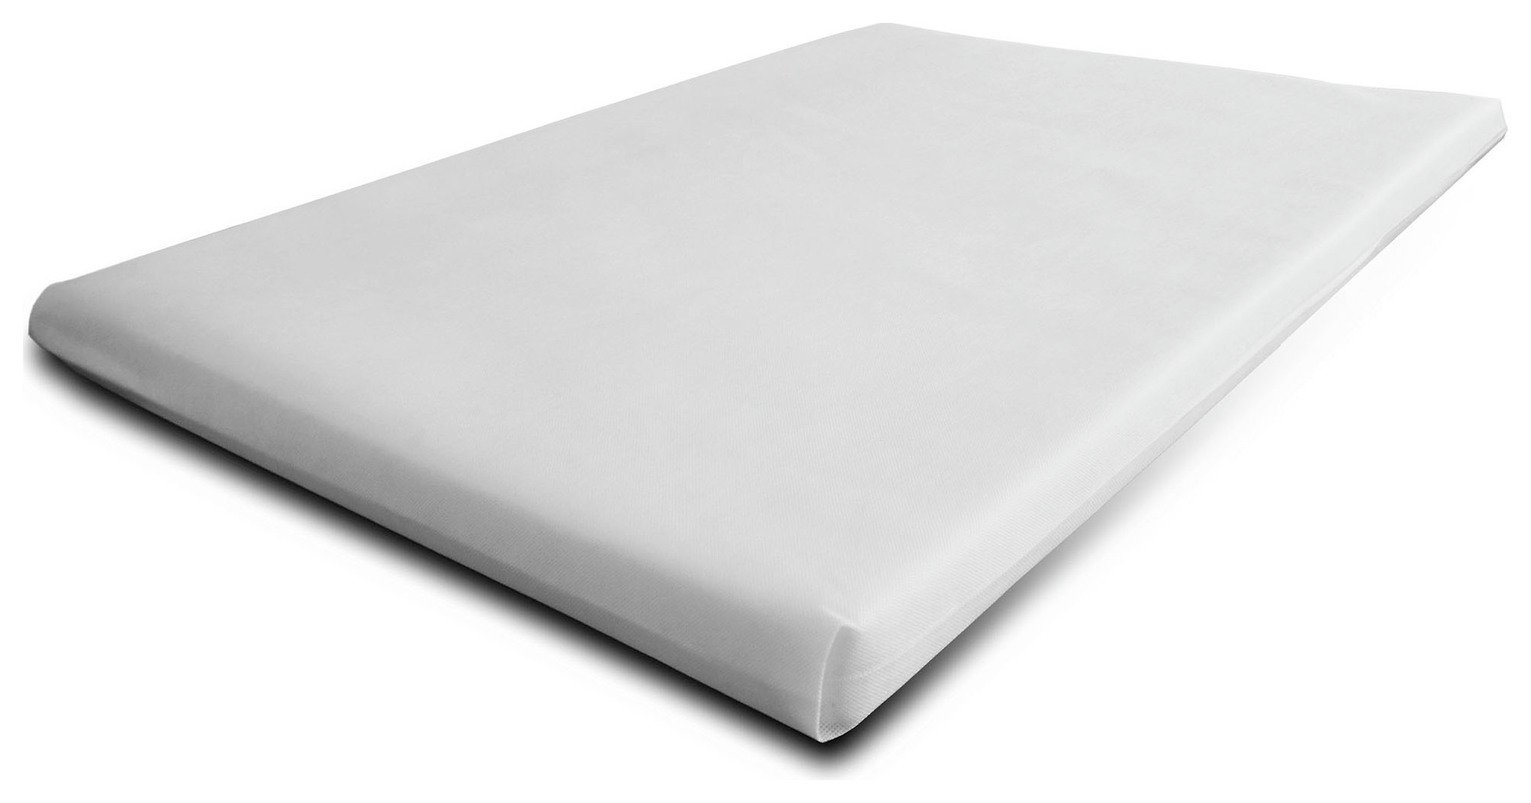 cot mattress 140 x 69